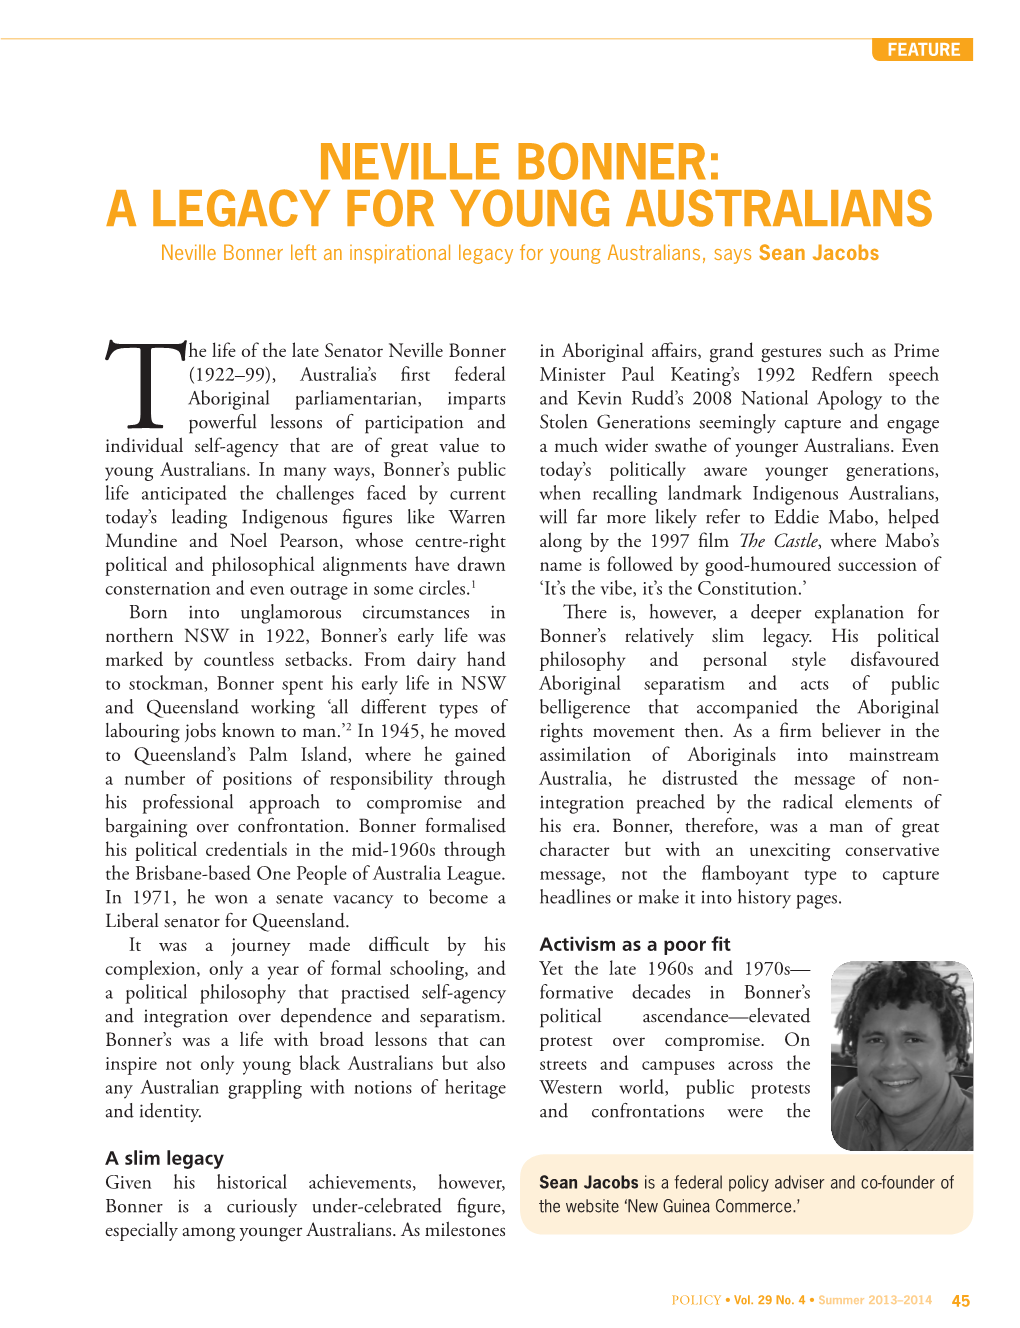 NEVILLE BONNER: a LEGACY for YOUNG AUSTRALIANS Neville Bonner Left an Inspirational Legacy for Young Australians, Says Sean Jacobs